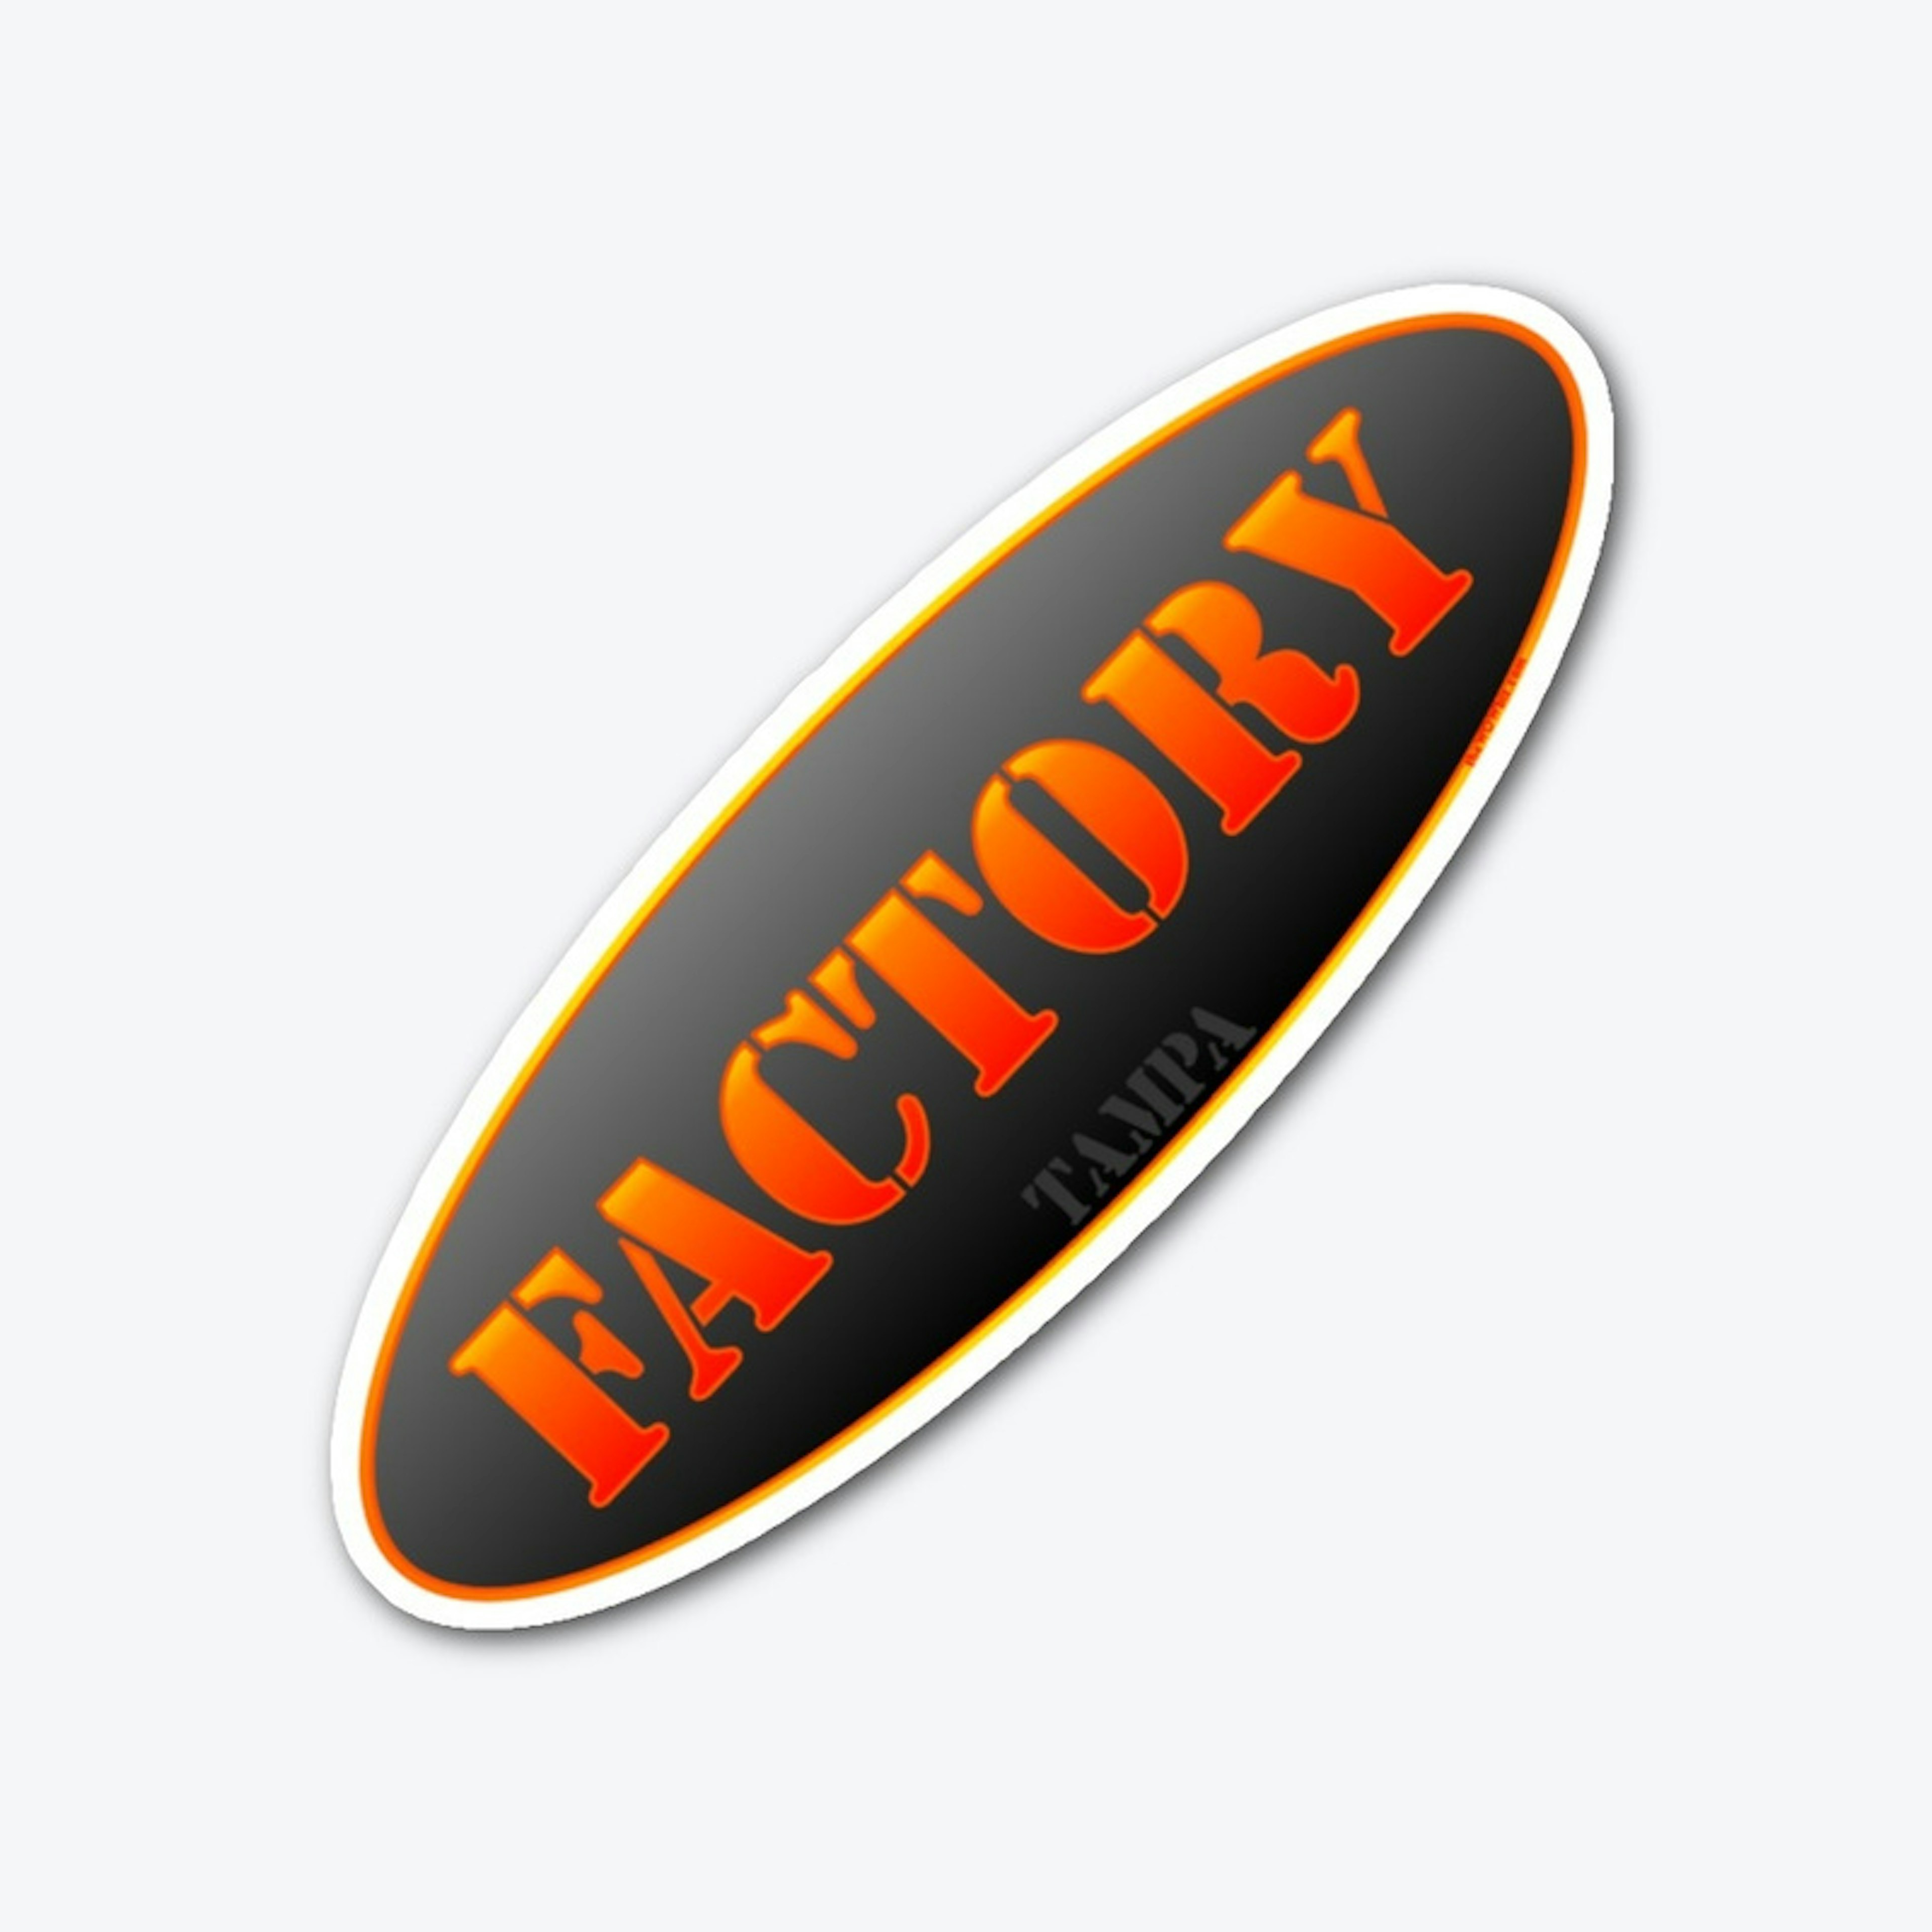 FactoryTPA